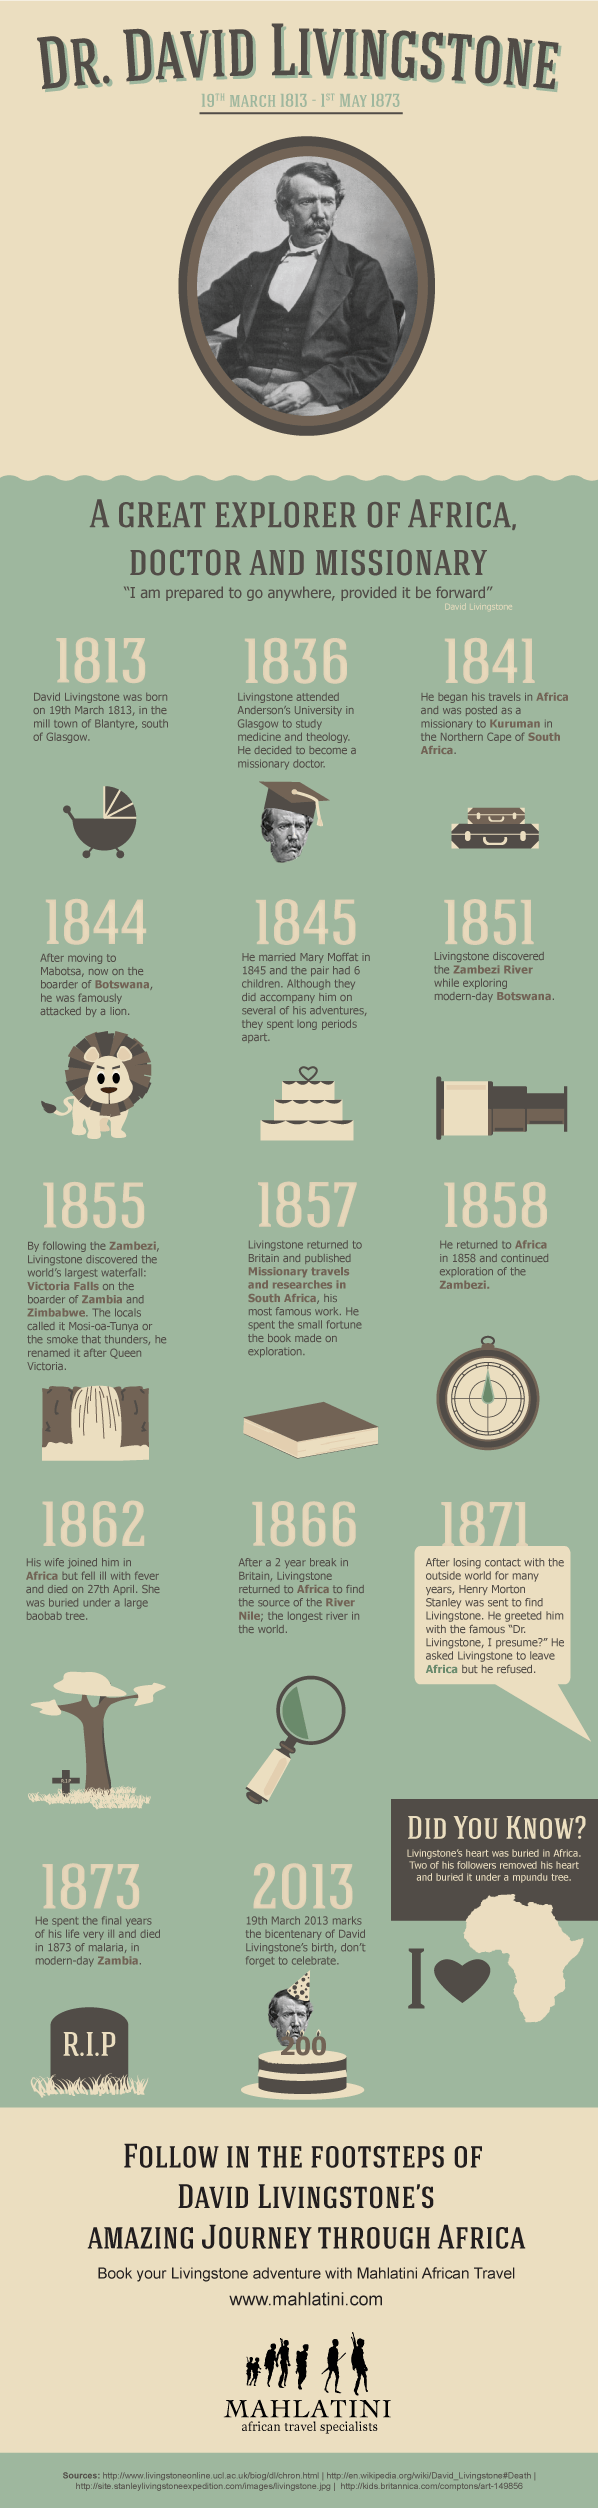 David Livingstone's Bicentenary Infographic